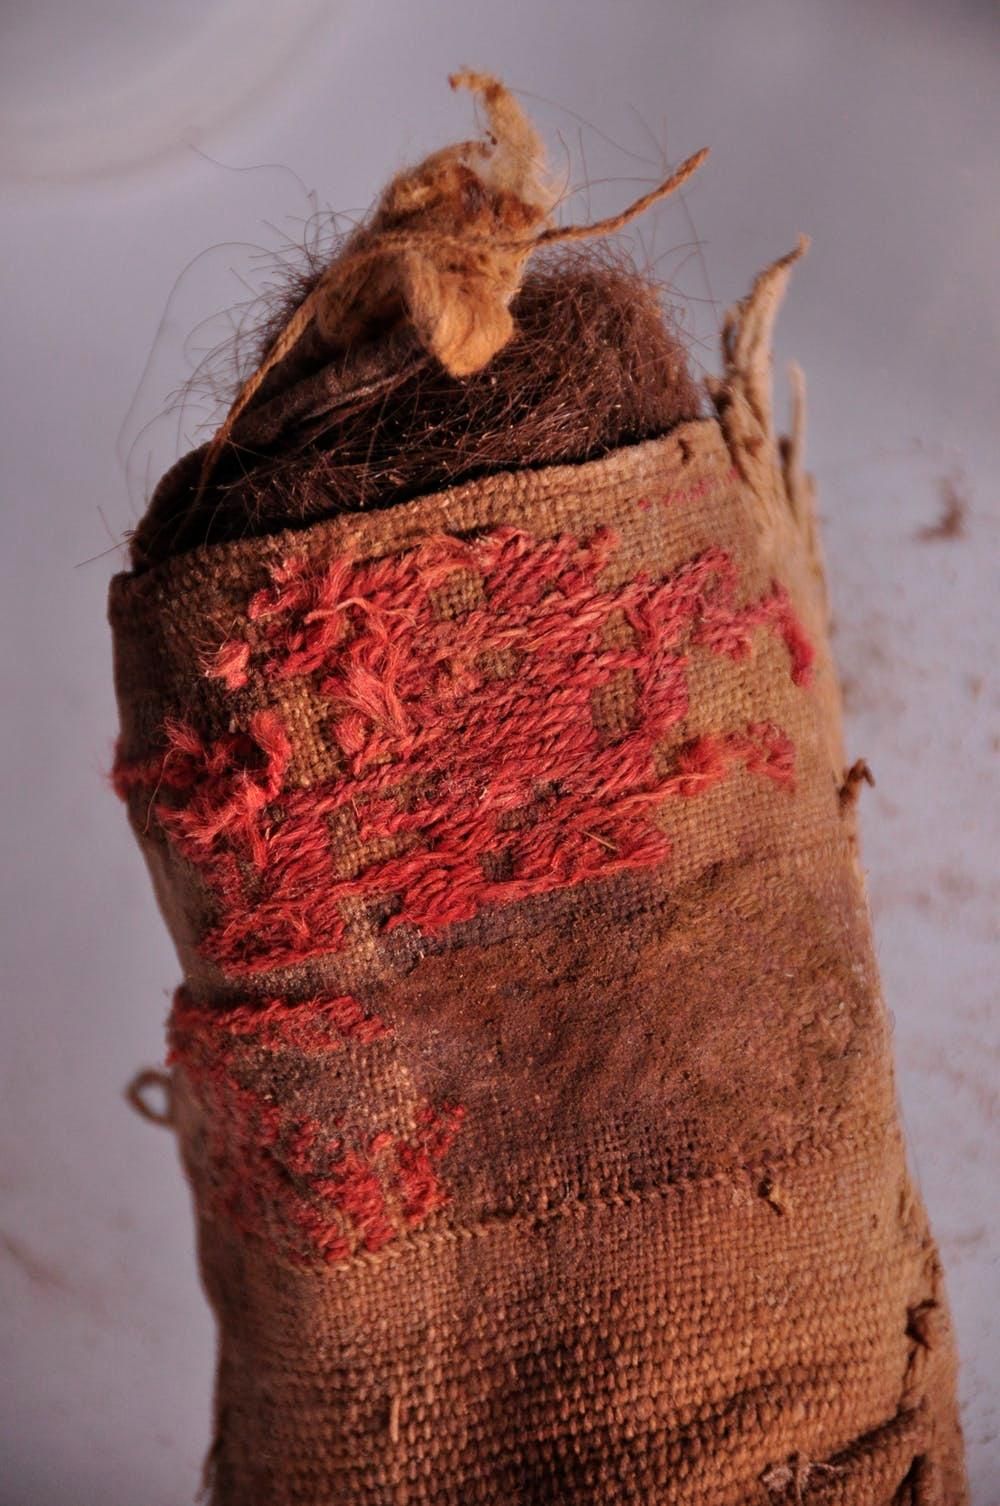 A woven cloth bag stuffed with human hair.